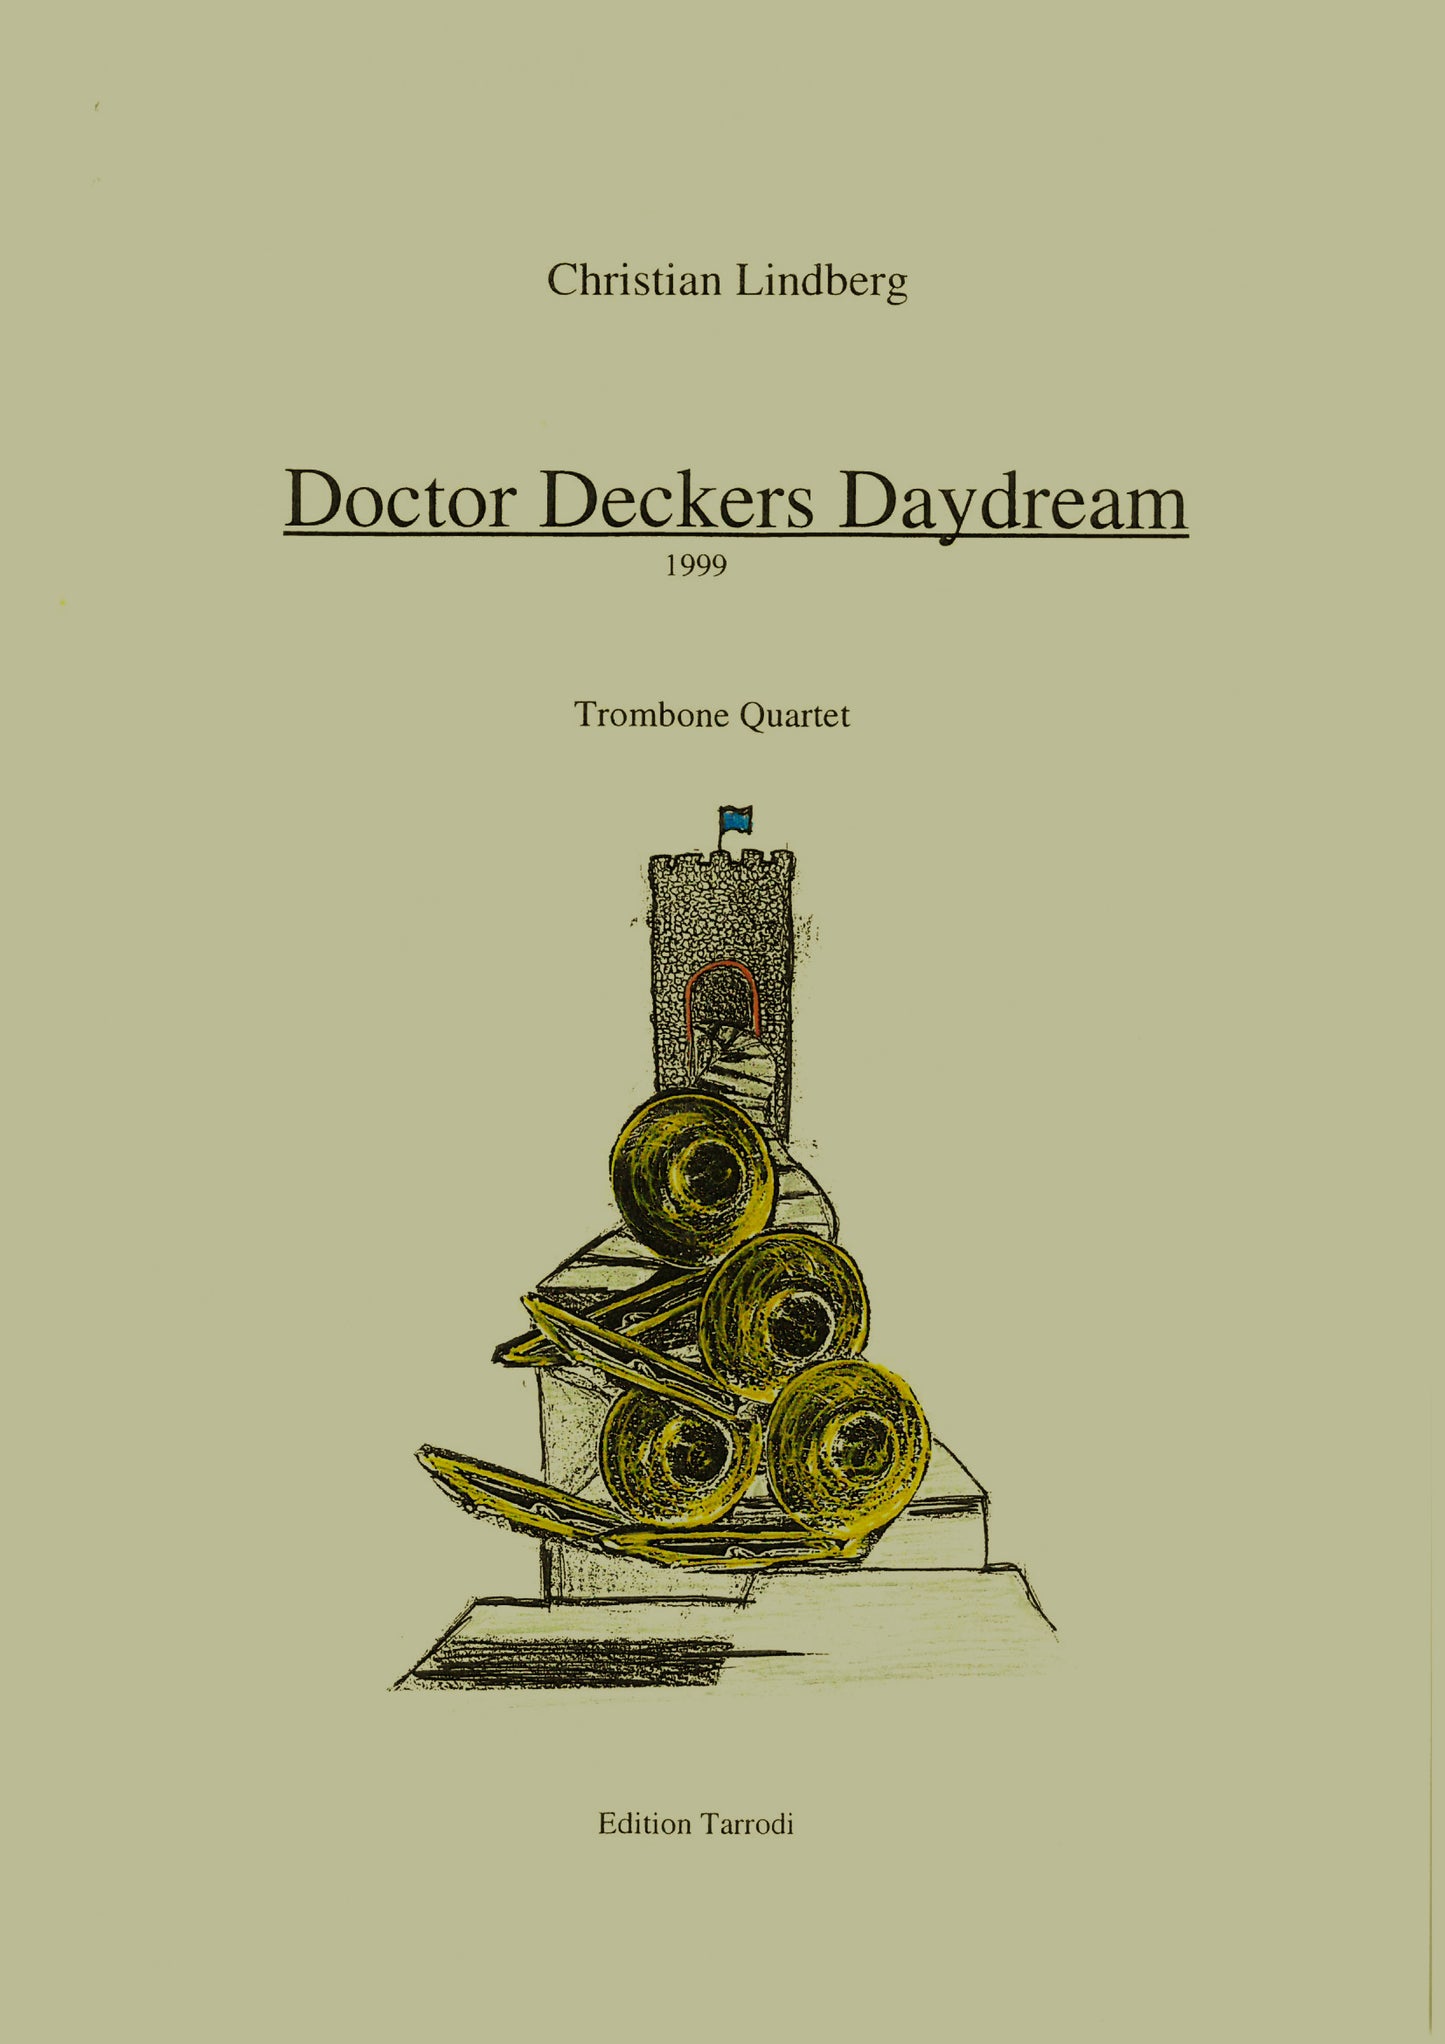 Christian Lindberg - Doctor Deckers Daydream, Trombone Quartet